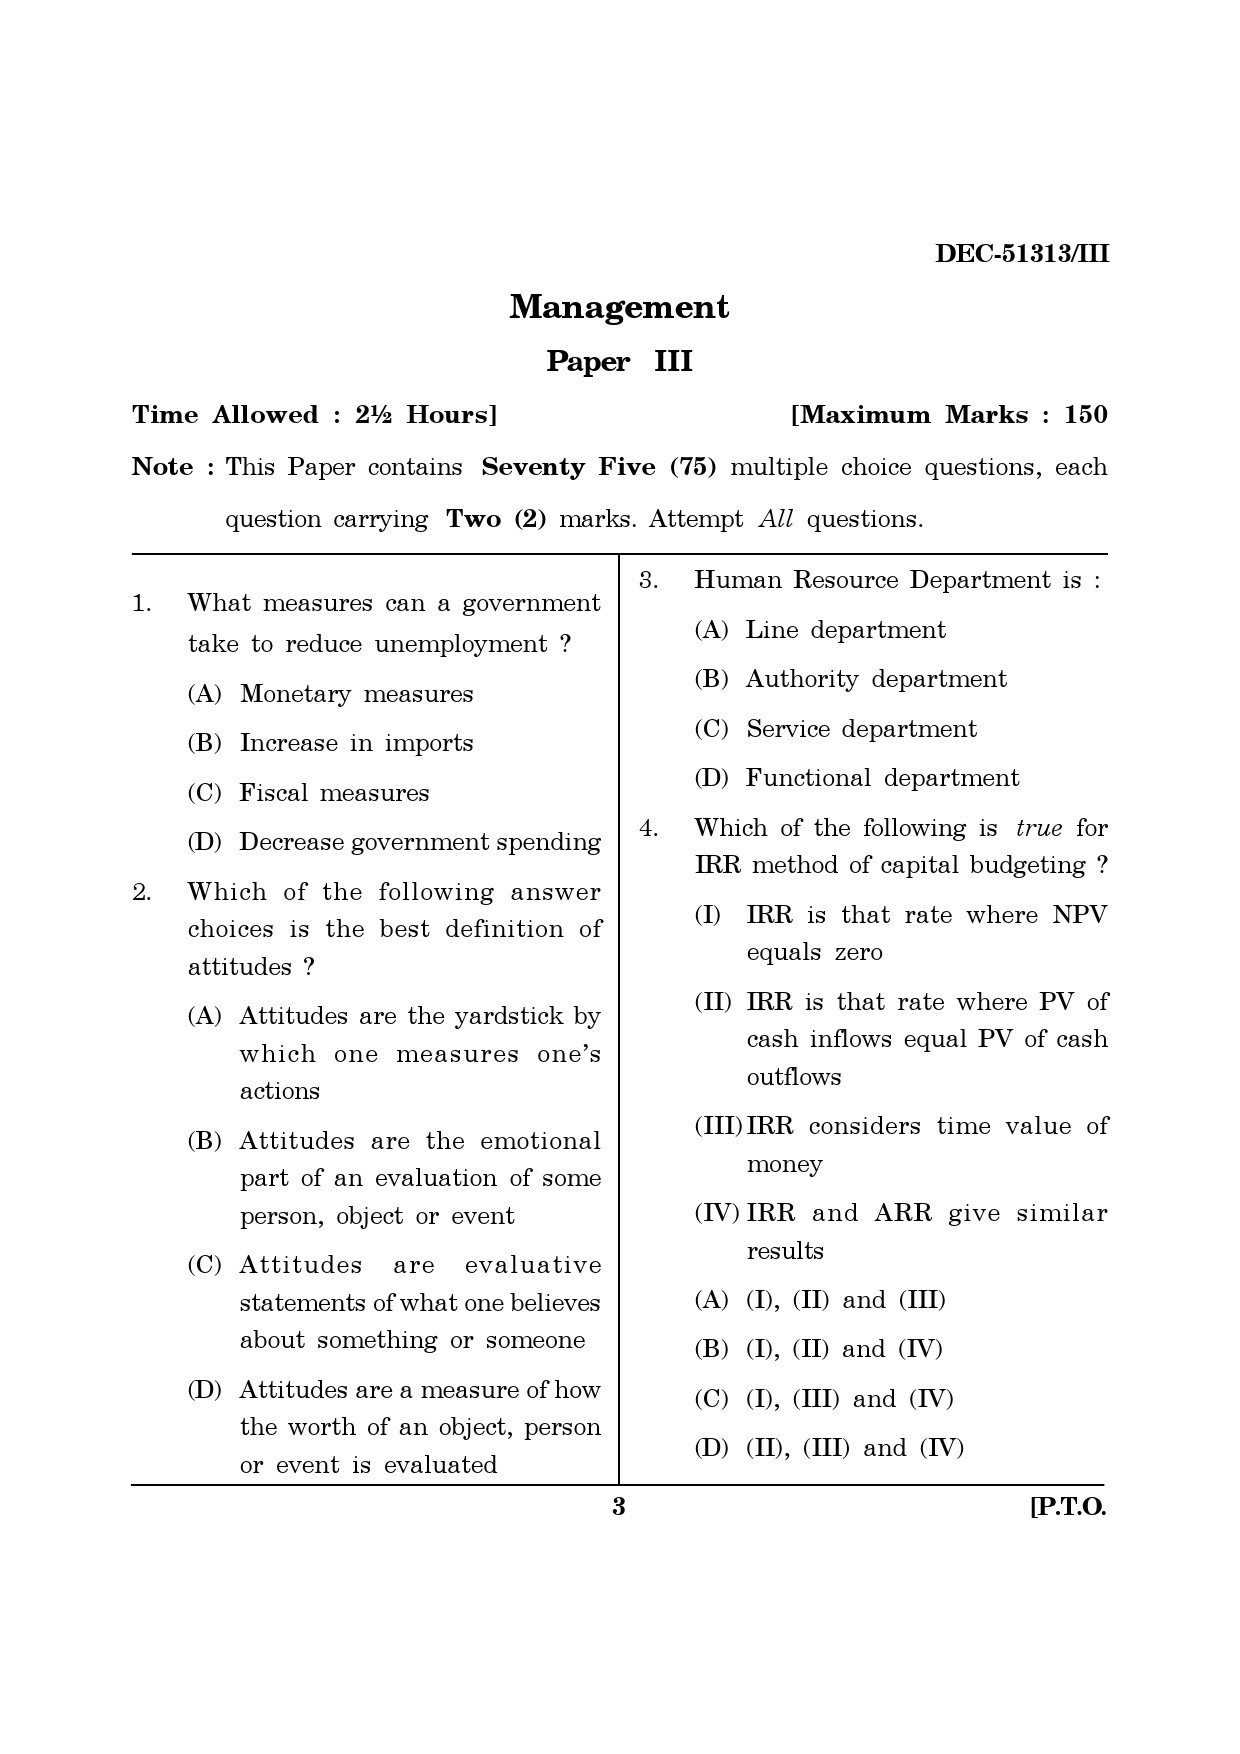 Maharashtra SET Management Question Paper III December 2013 2